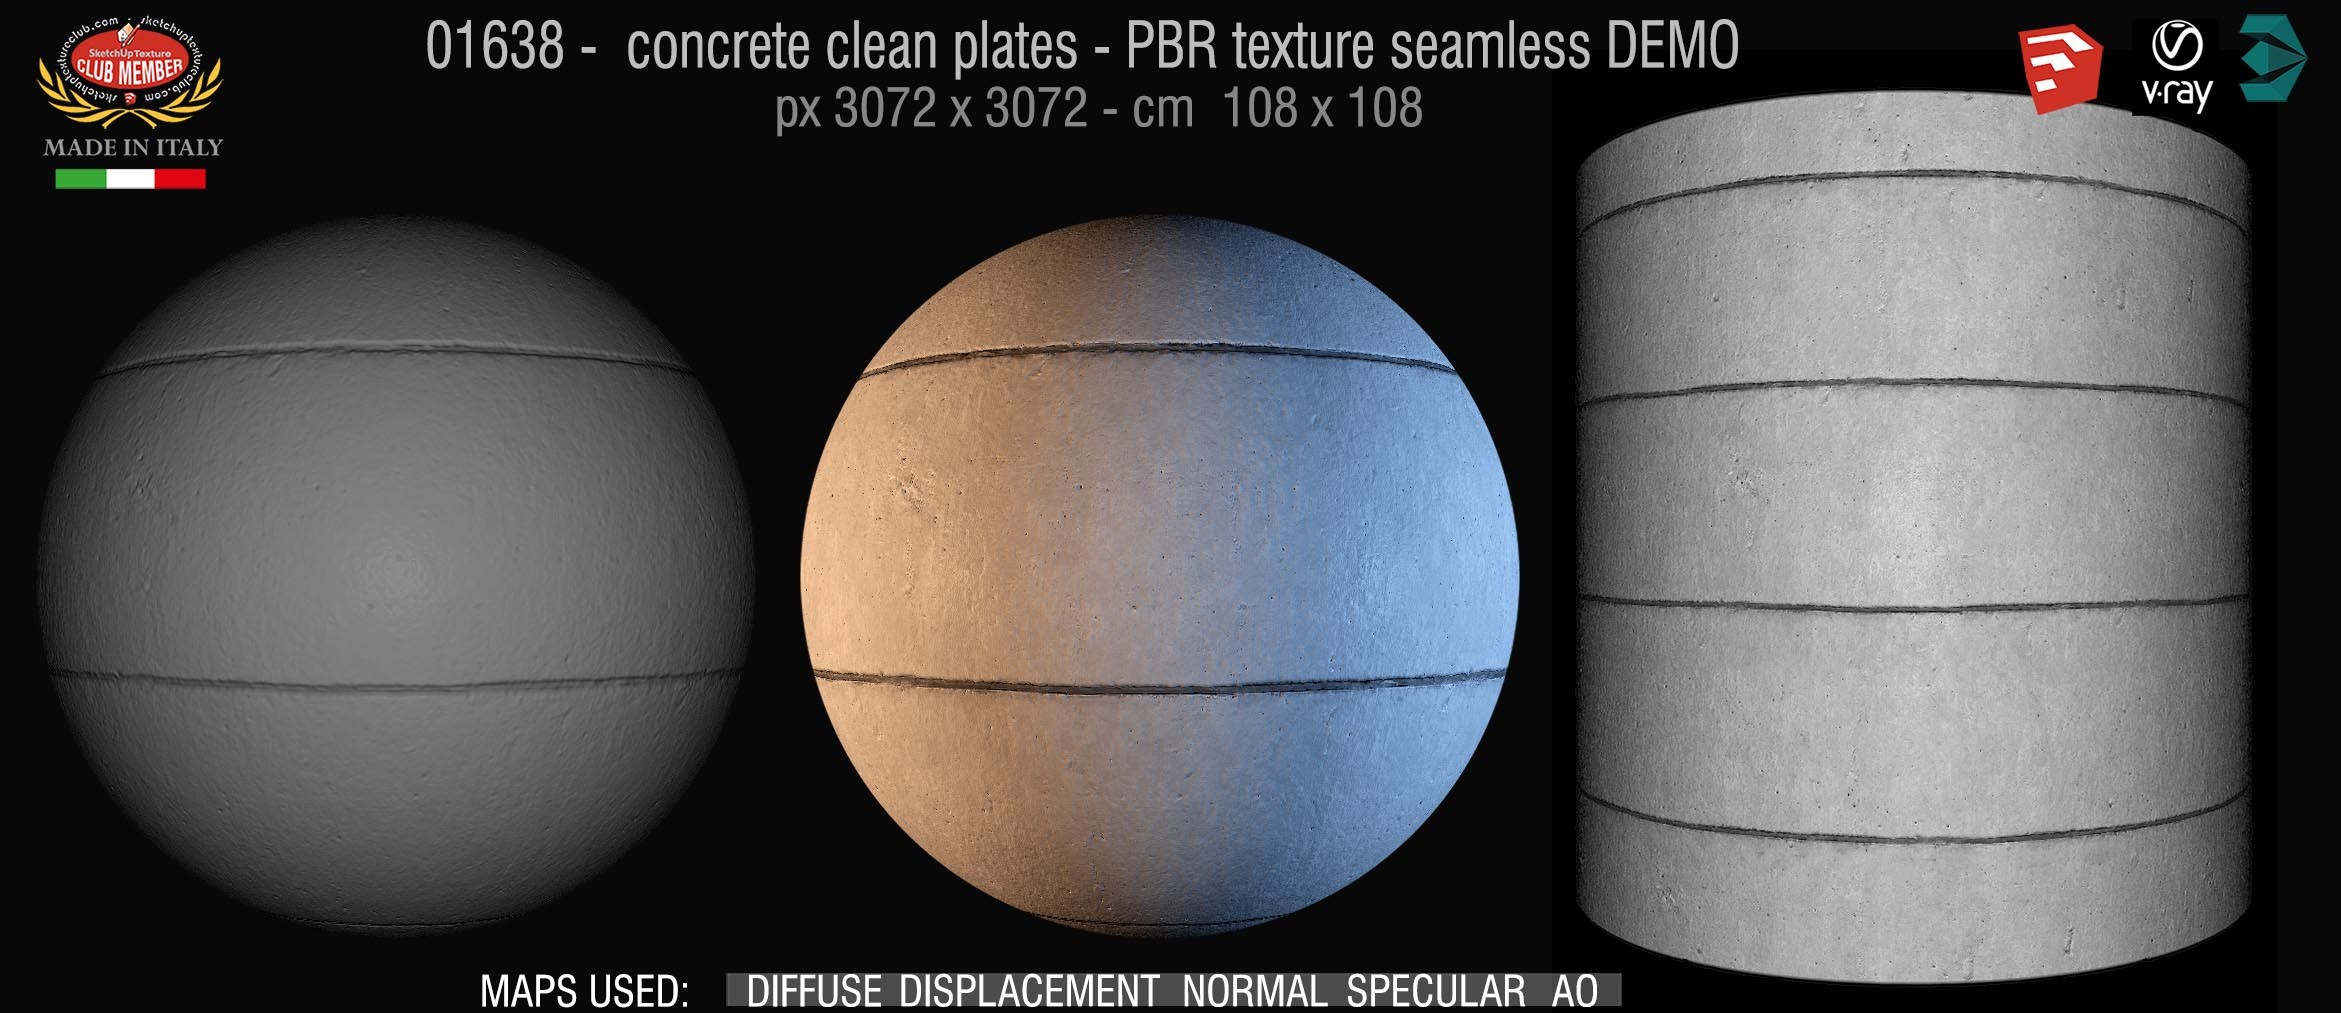 01638 concrete clean plates wall PBR texture seamless DEMO